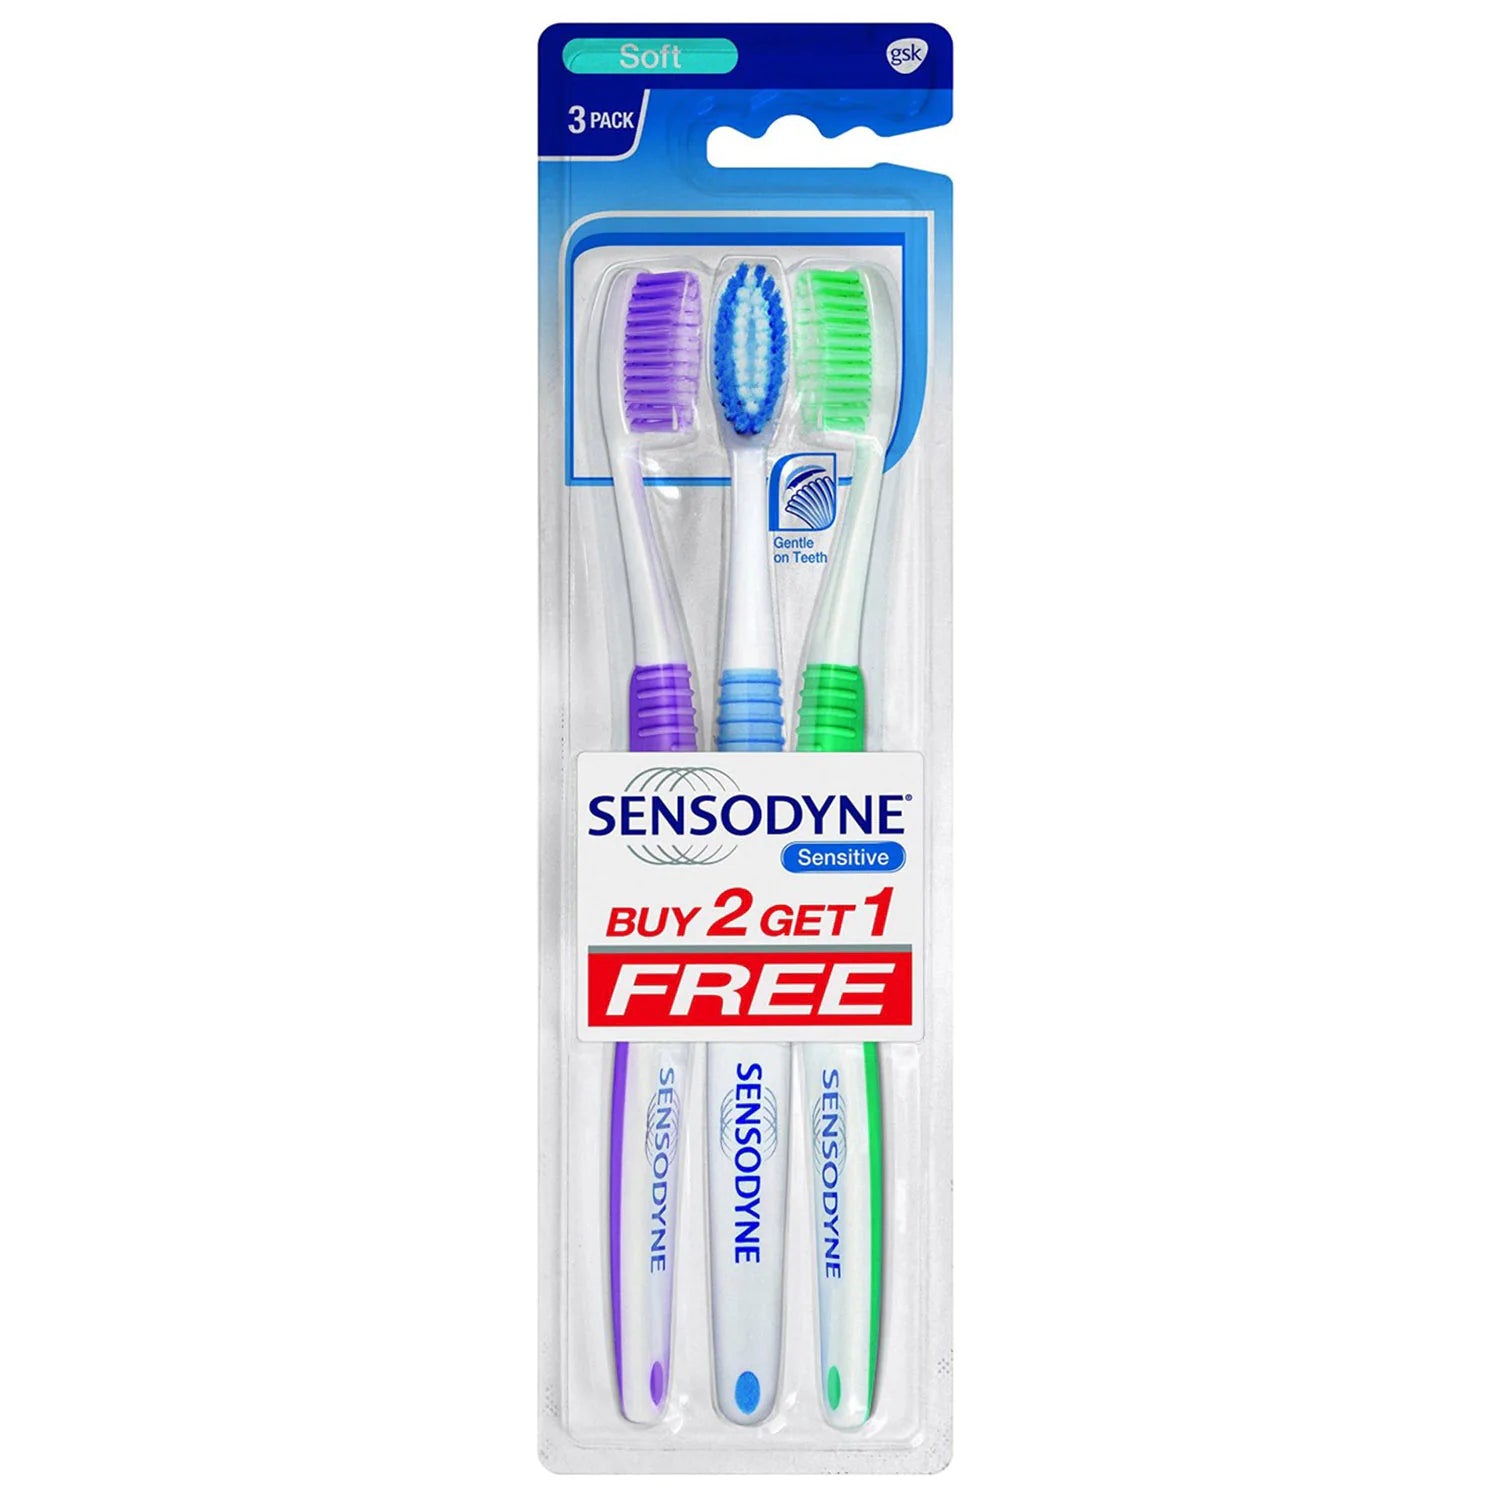 Shop Sensodyne Sensitive Soft Toothbrush - Buy 2 Get 1 Free at price 110.00 from Sensodyne Online - Ayush Care